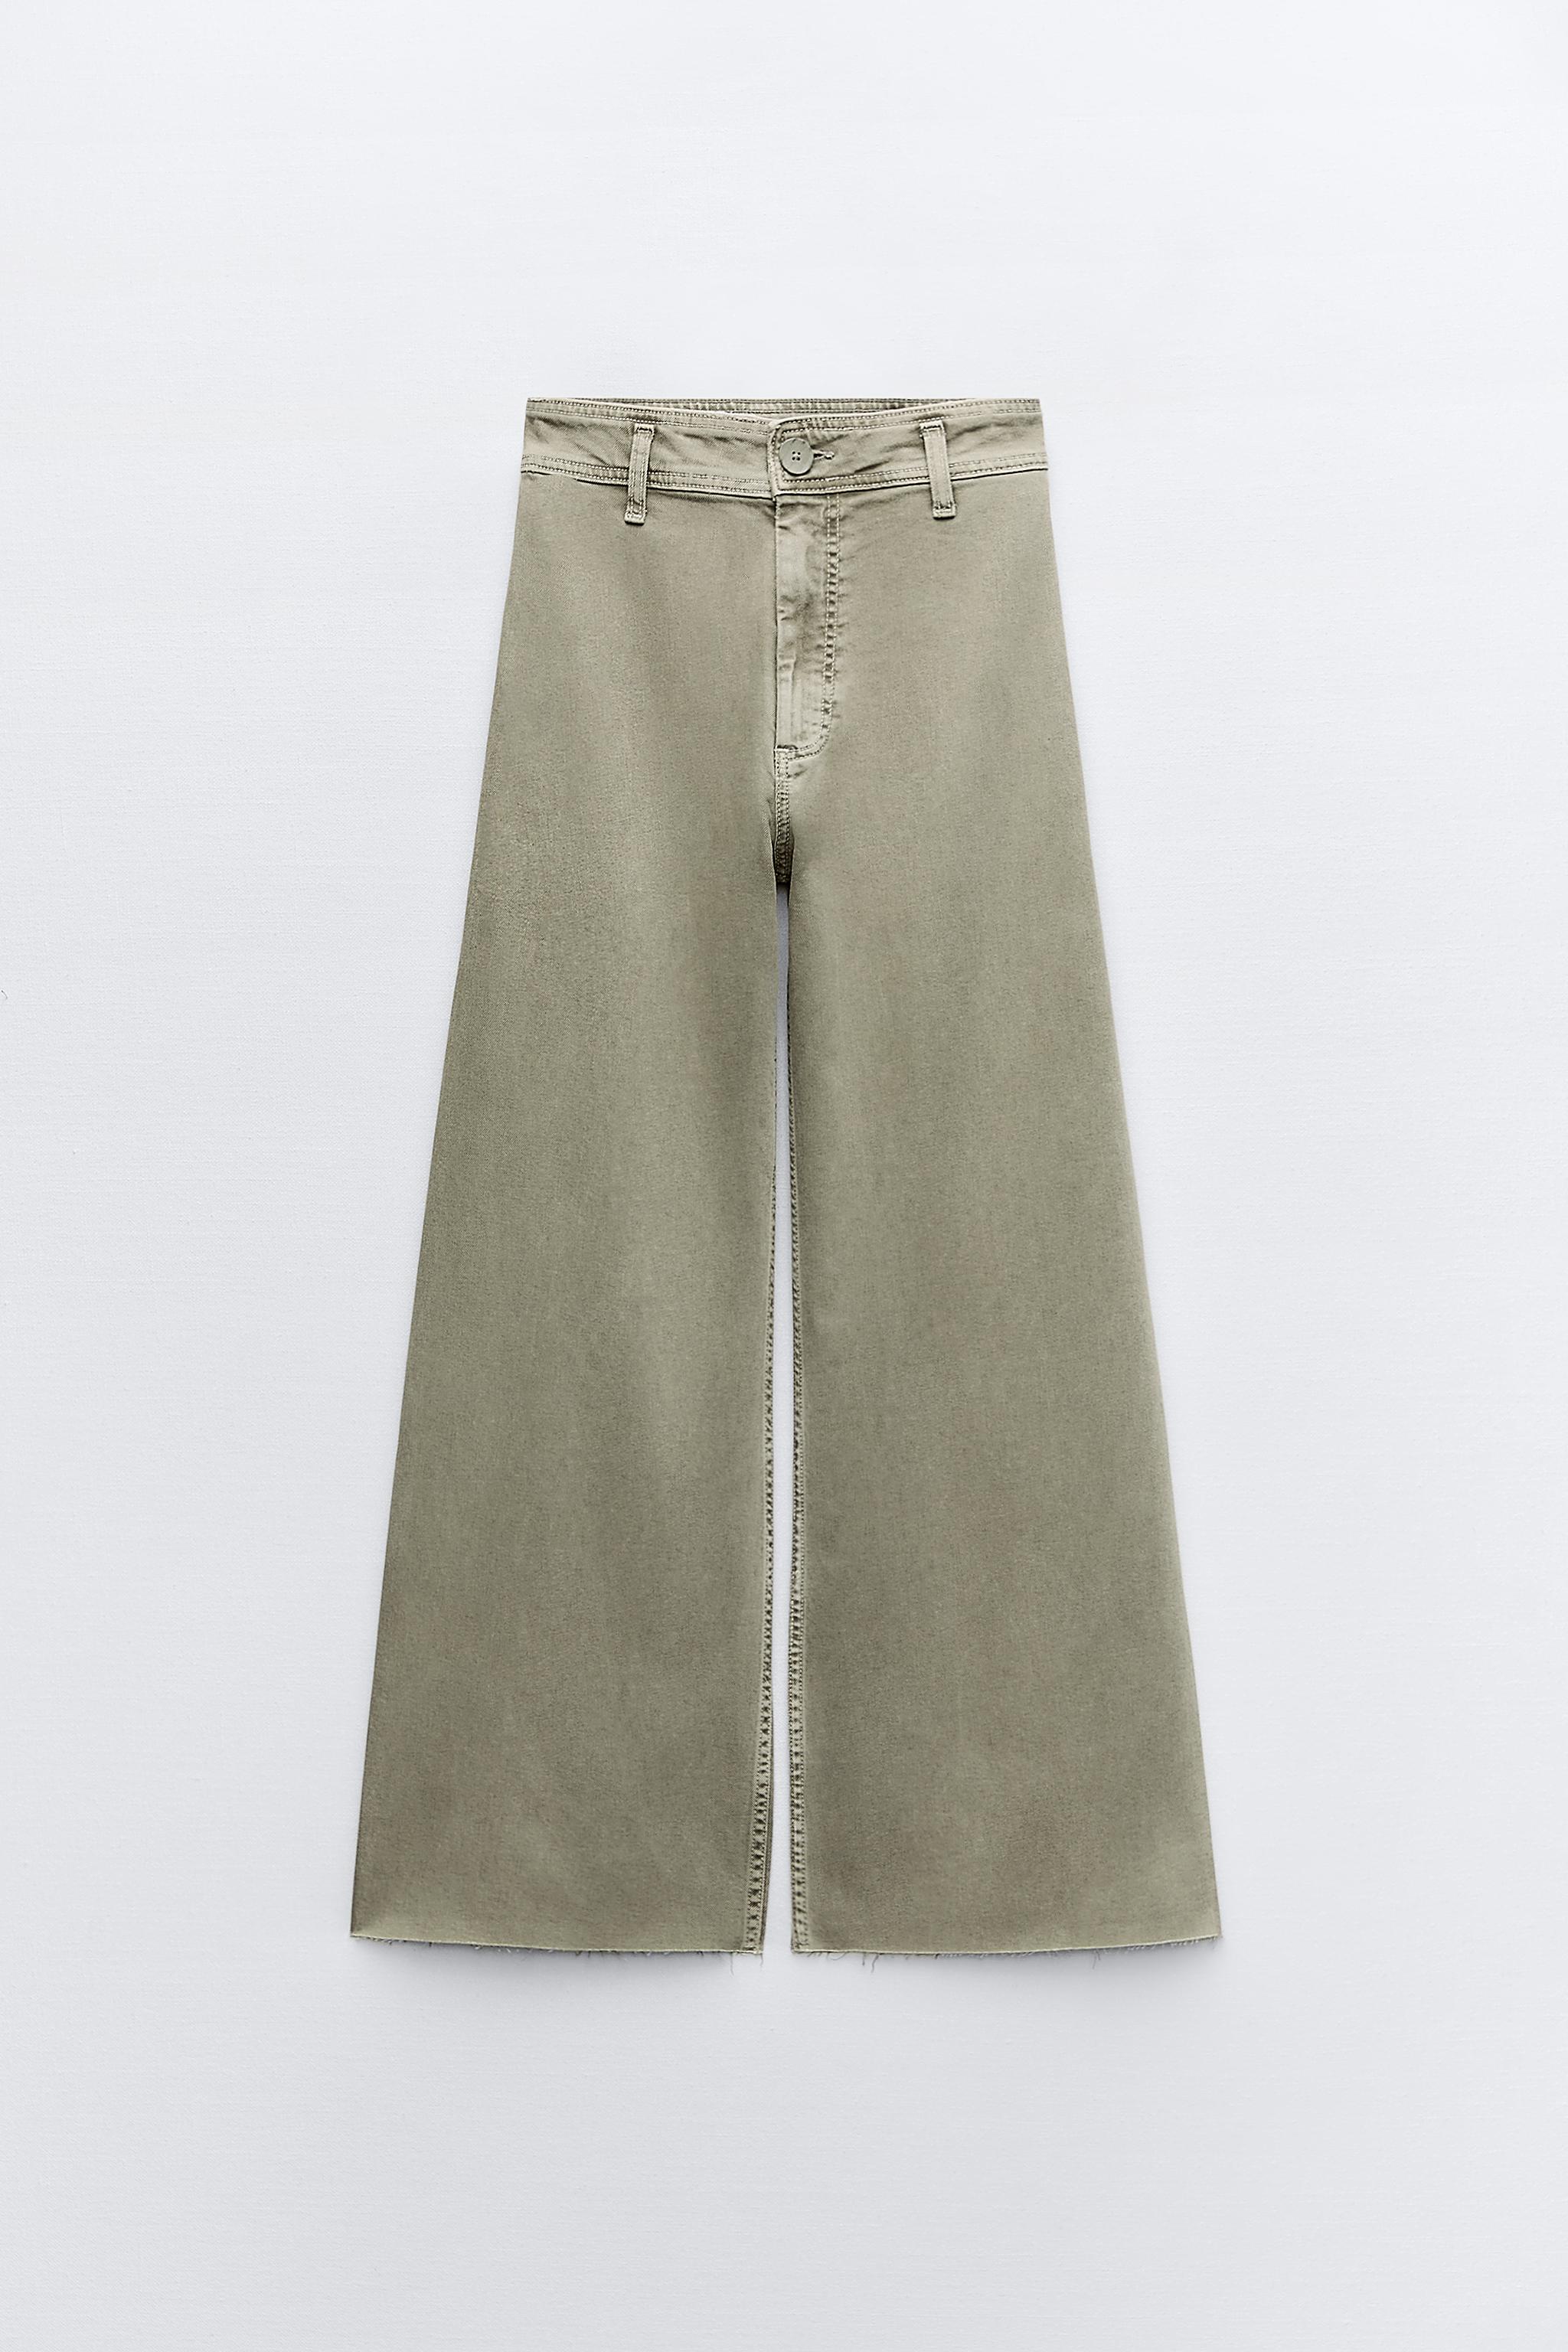 Zara Womens Dark Green Linen High Rise Drawstring Straight Pants